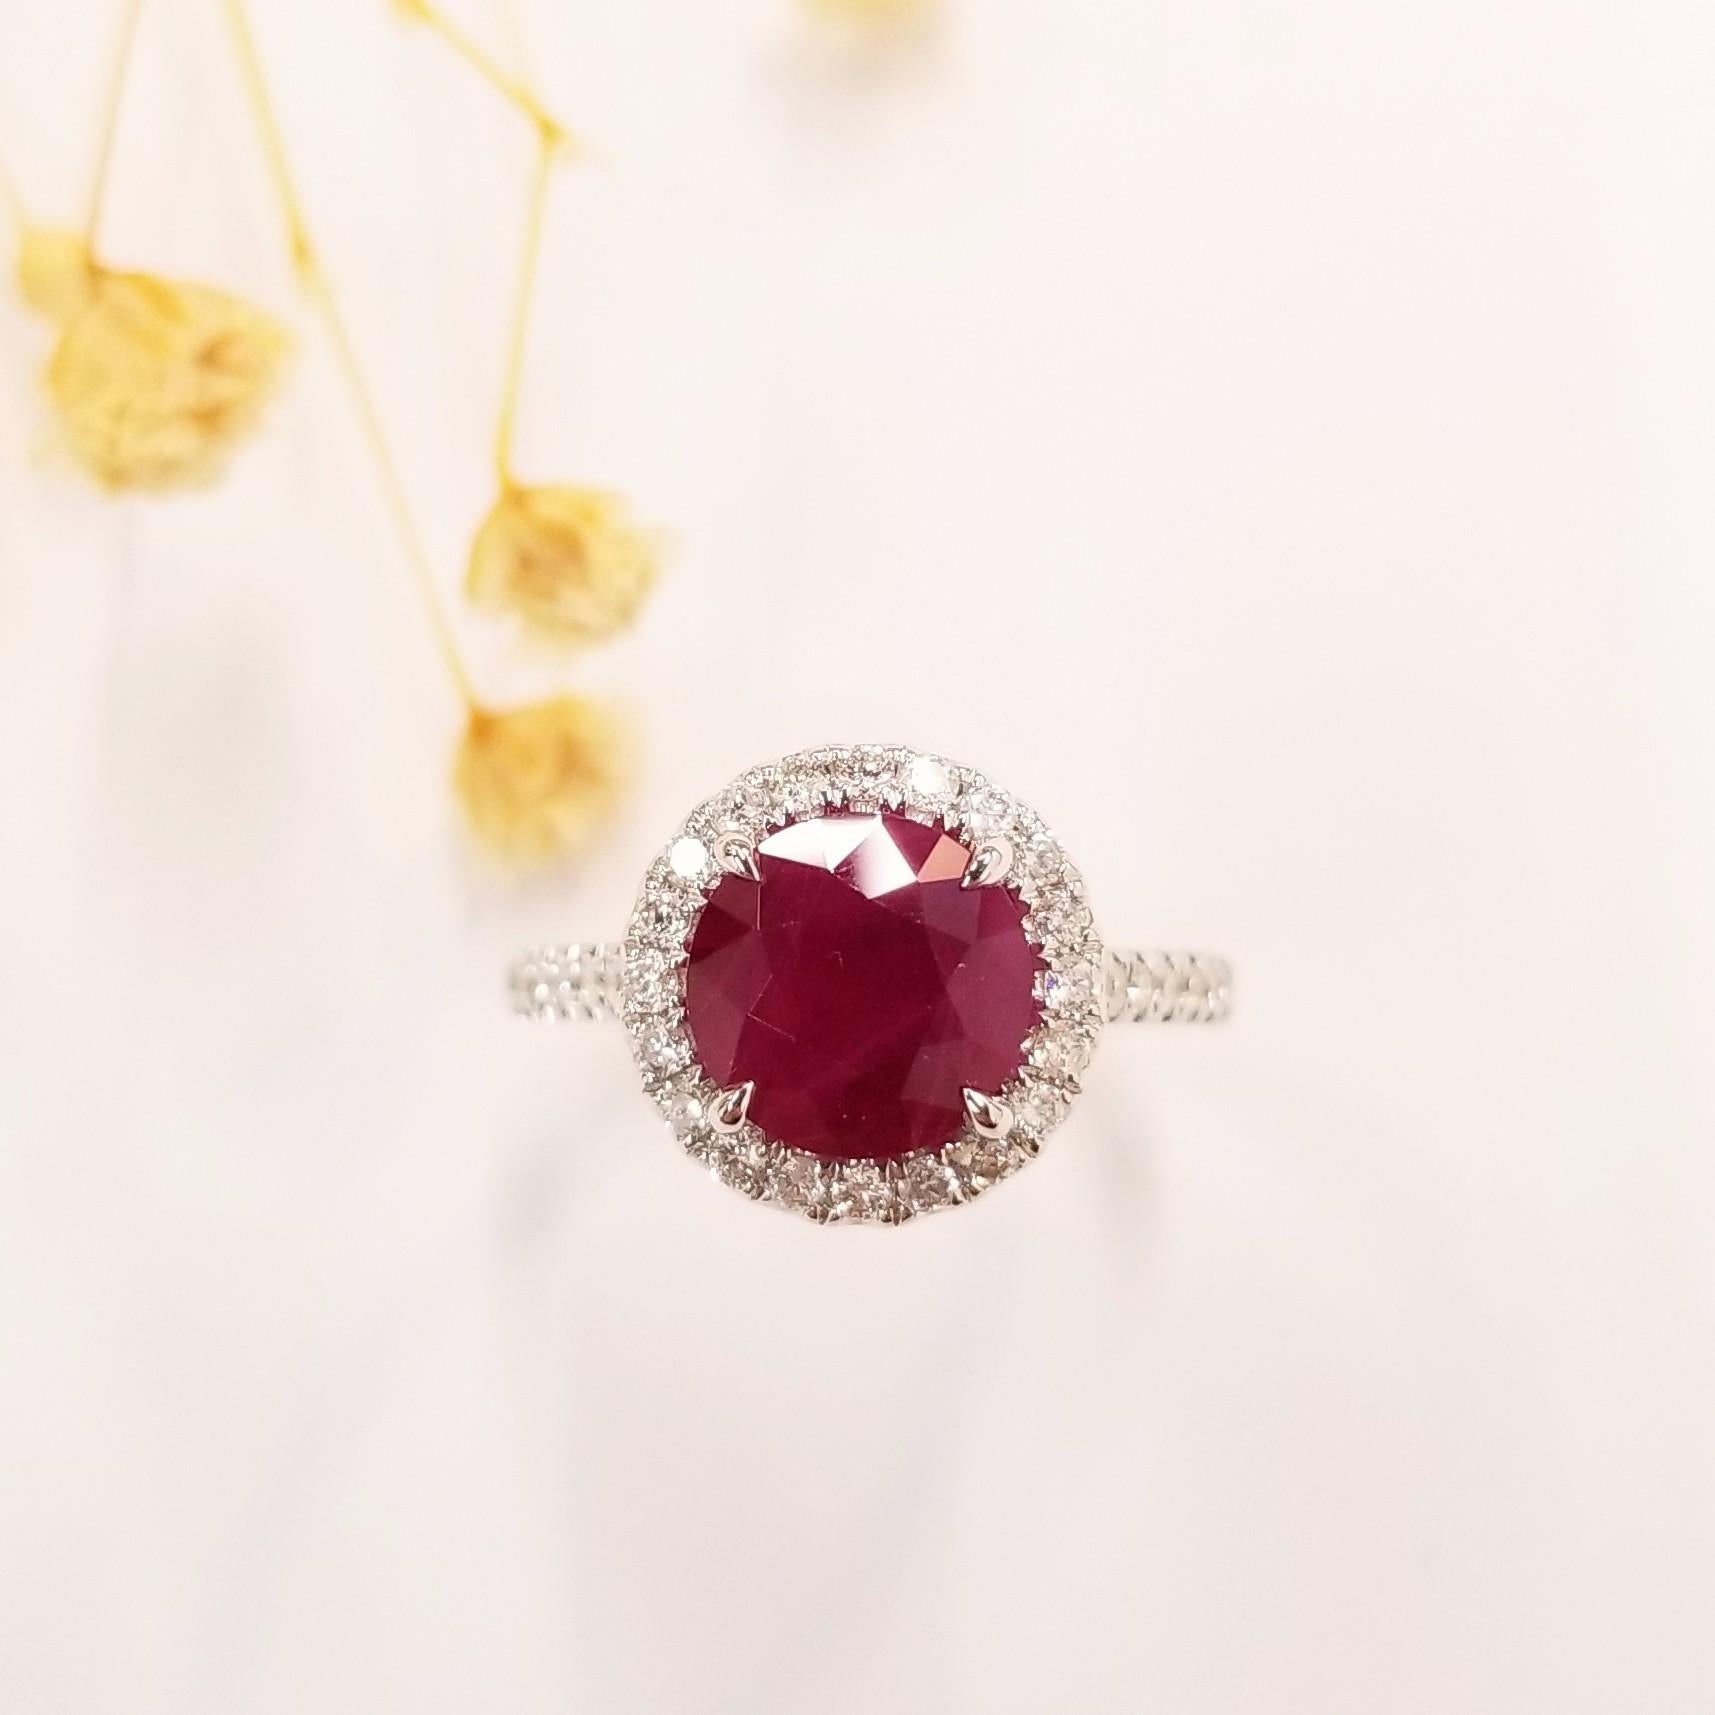 Modern IGI Certified 2.48 Carat Burma Ruby & Diamond Ring in 18K White Gold For Sale